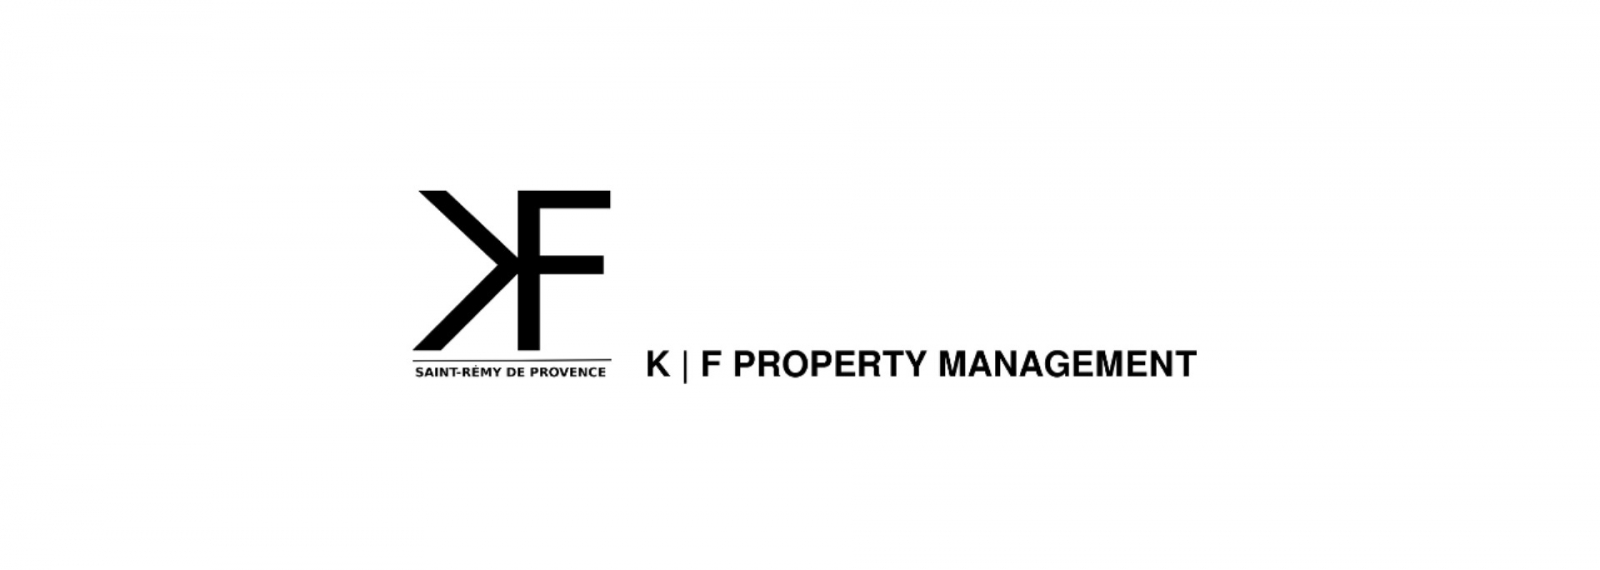 KF Property Management